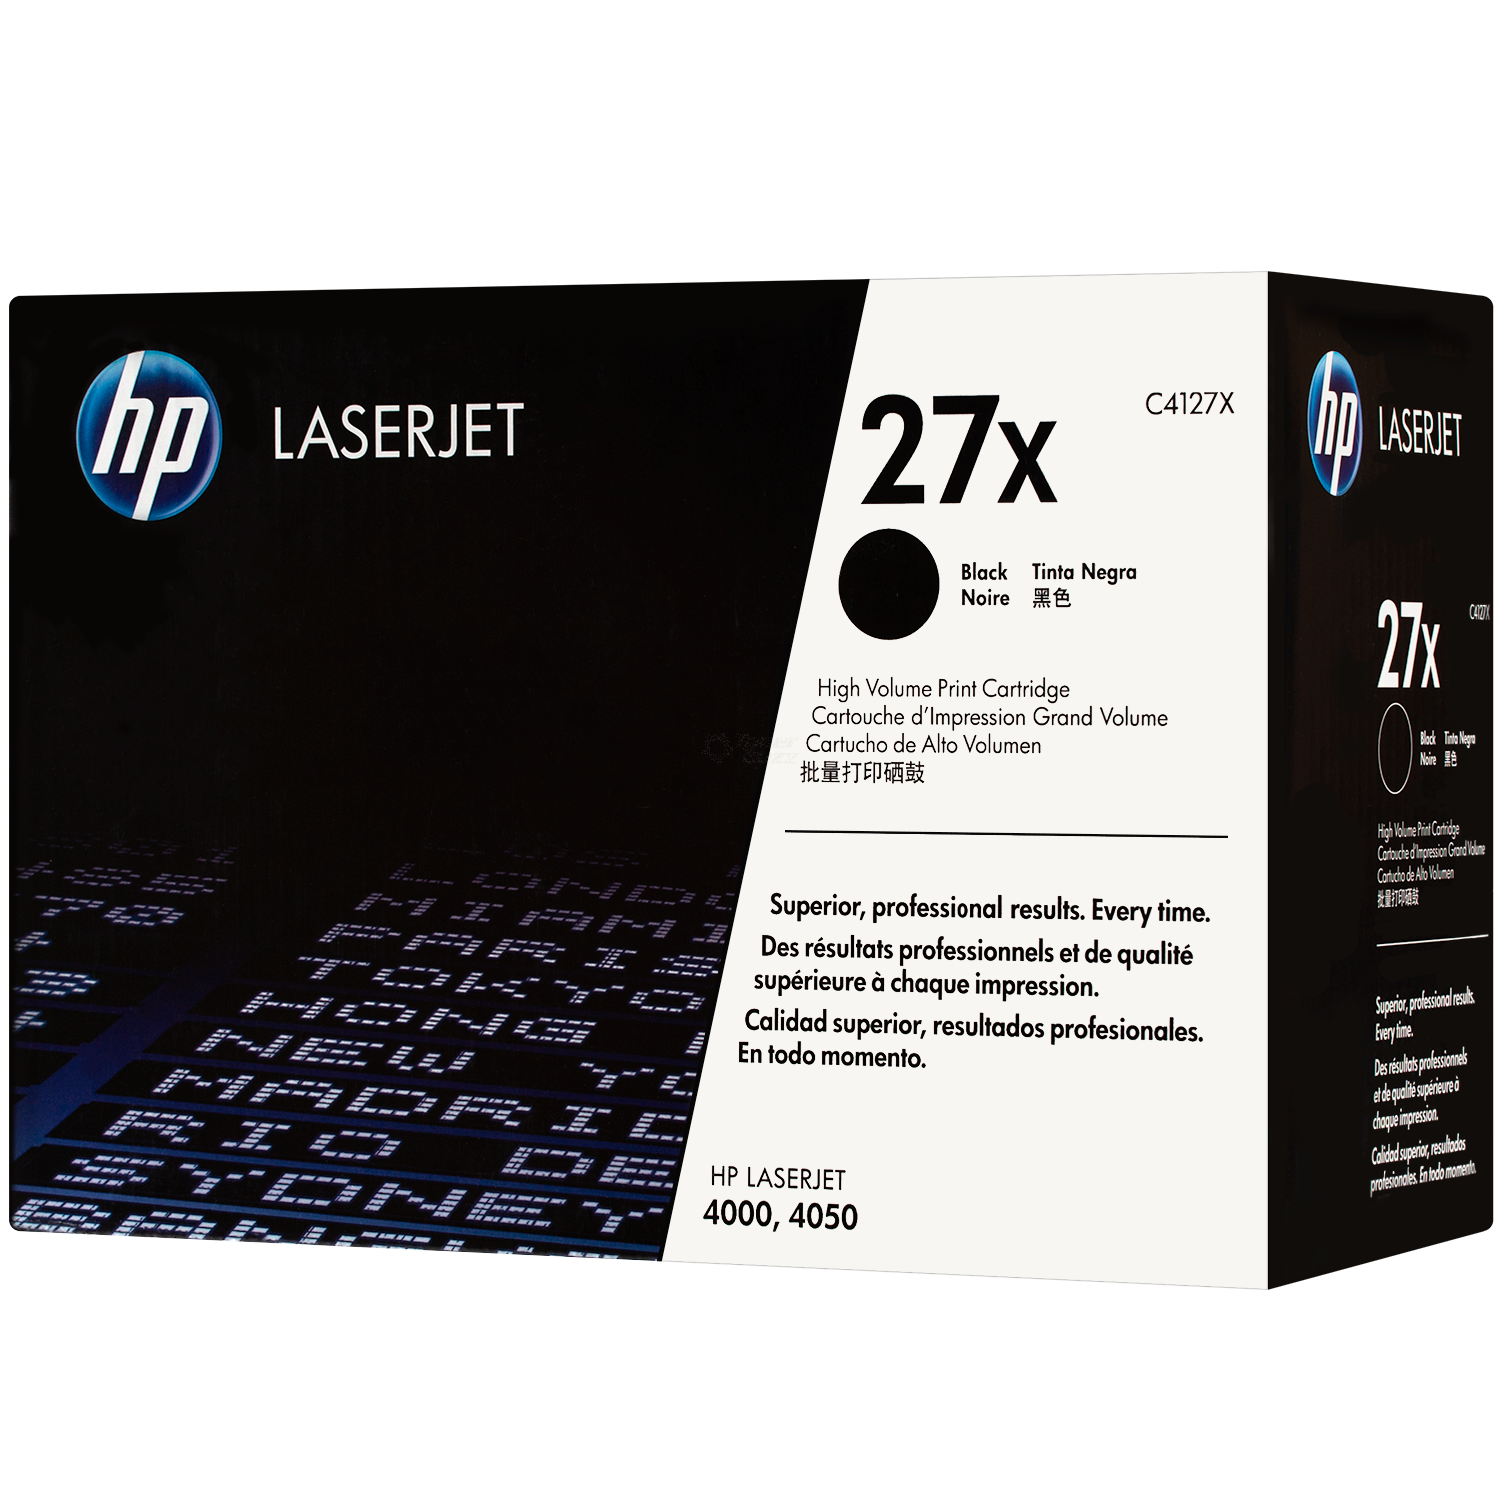 Laser Toner Cartridge C4127X Remanufactured HP LaserJet 4000 4050 Compatible 